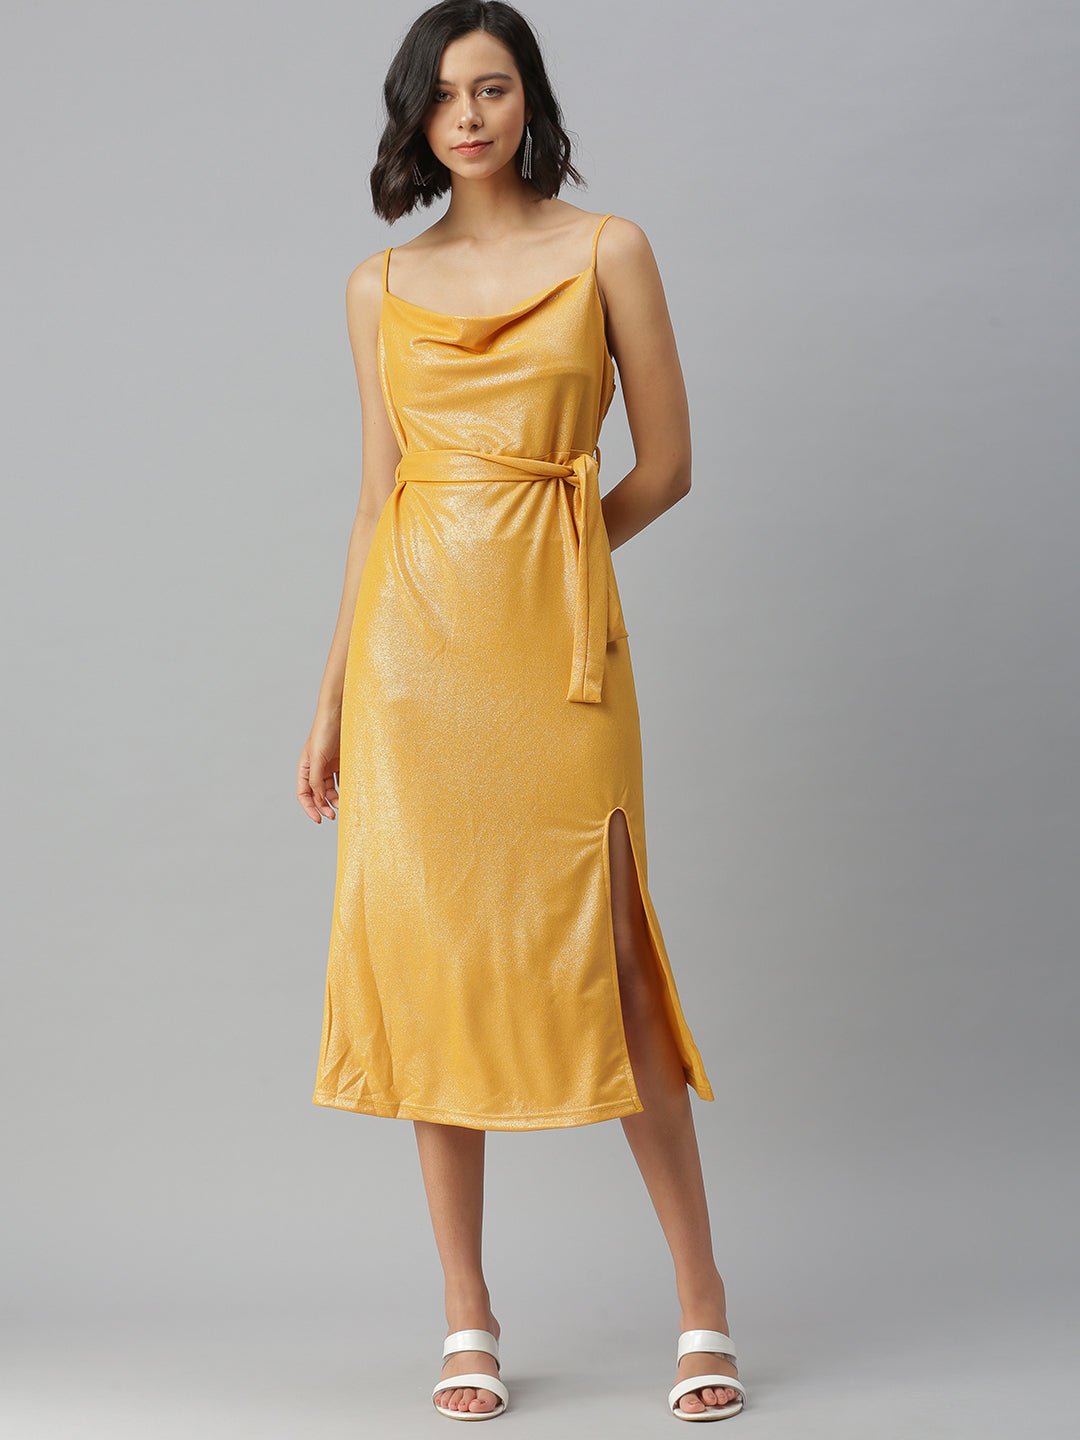 Women's Yellow Solid Sheath Dress